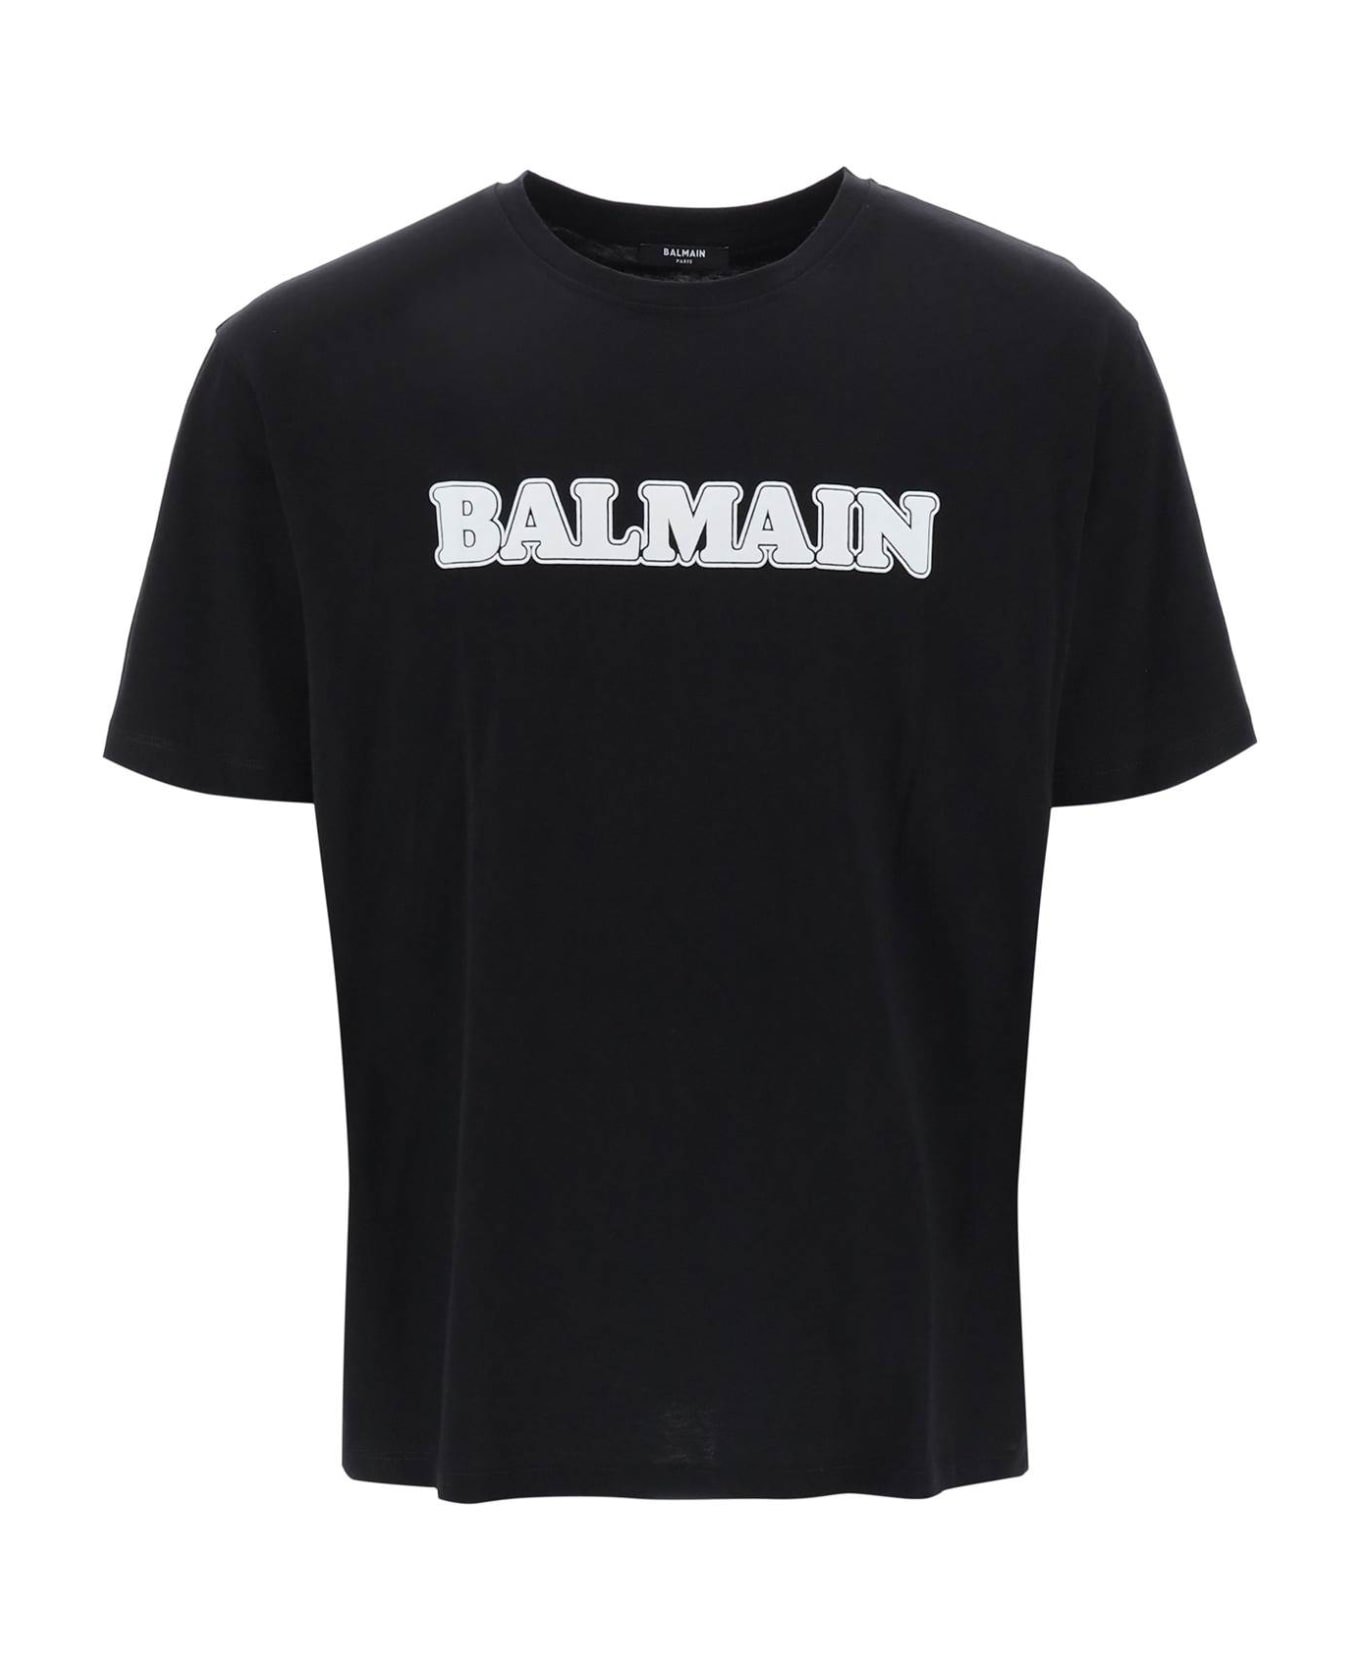 Balmain Retro Flock T-shirt - NOIR BLANC (Black)